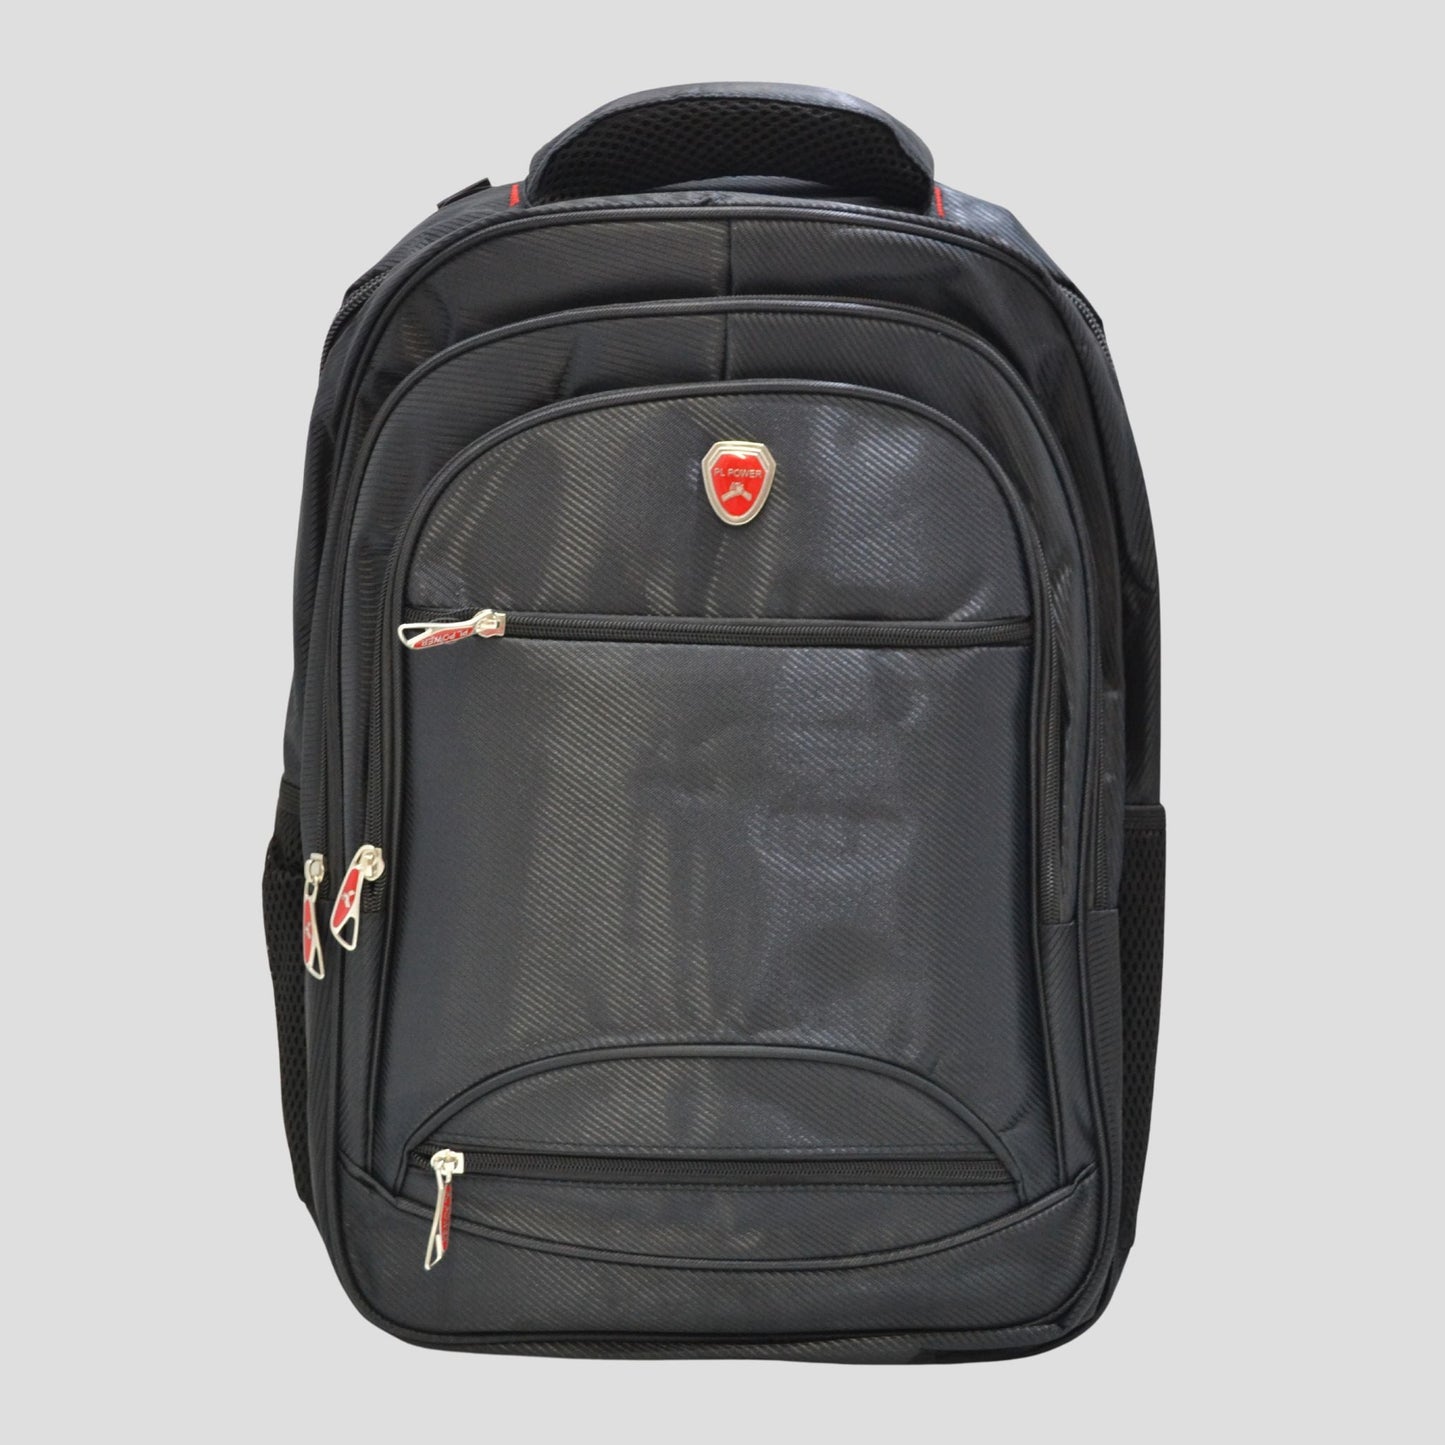 G914 Multi-Purpose Backpack